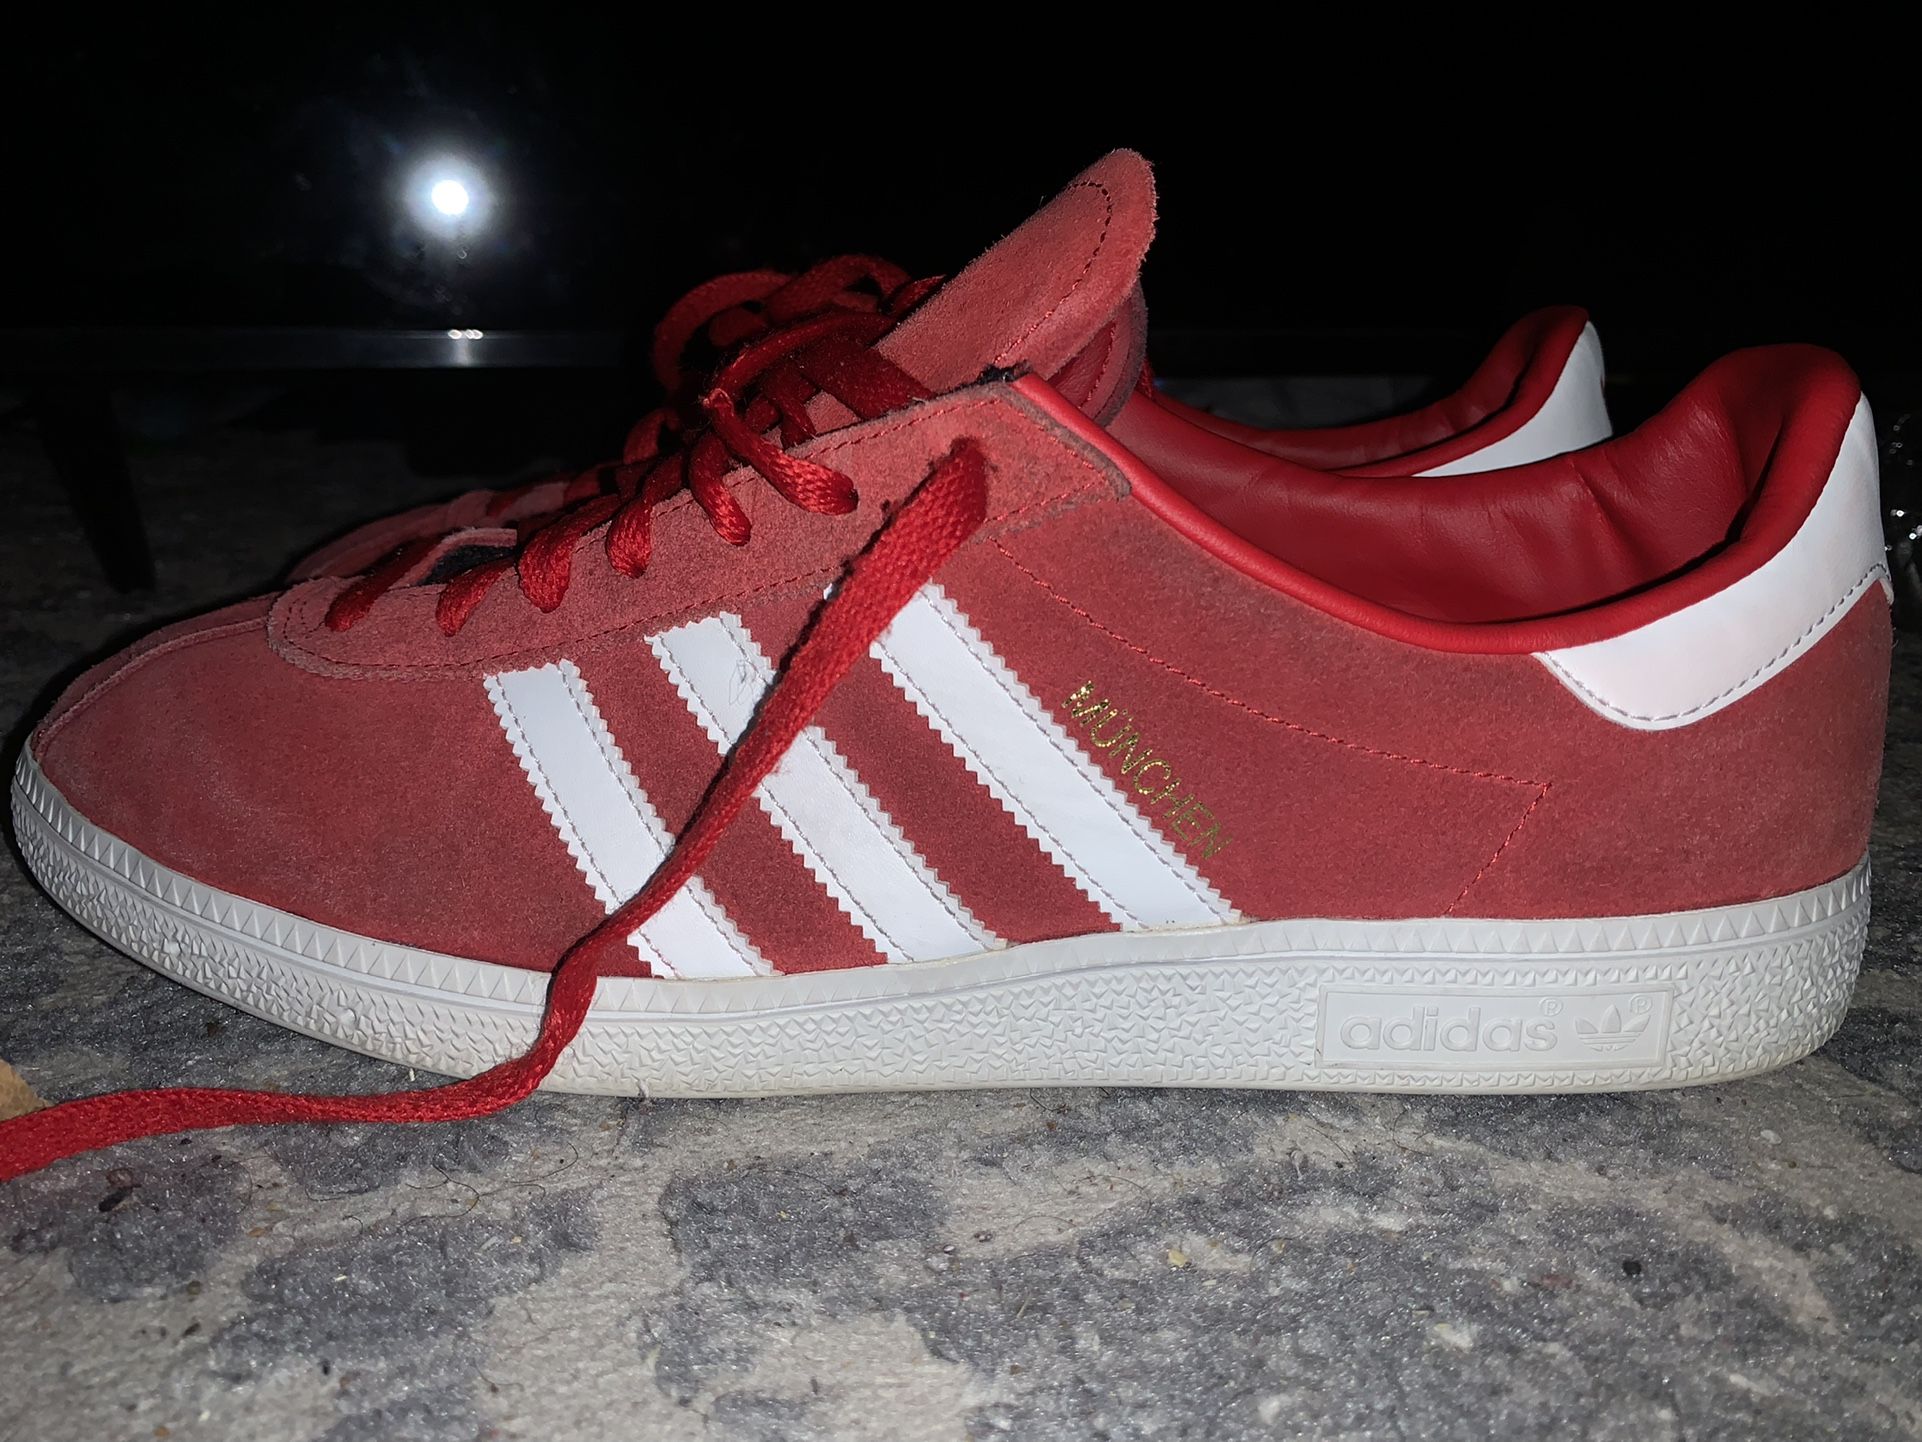 Adidas ‘München” (mens size 11)